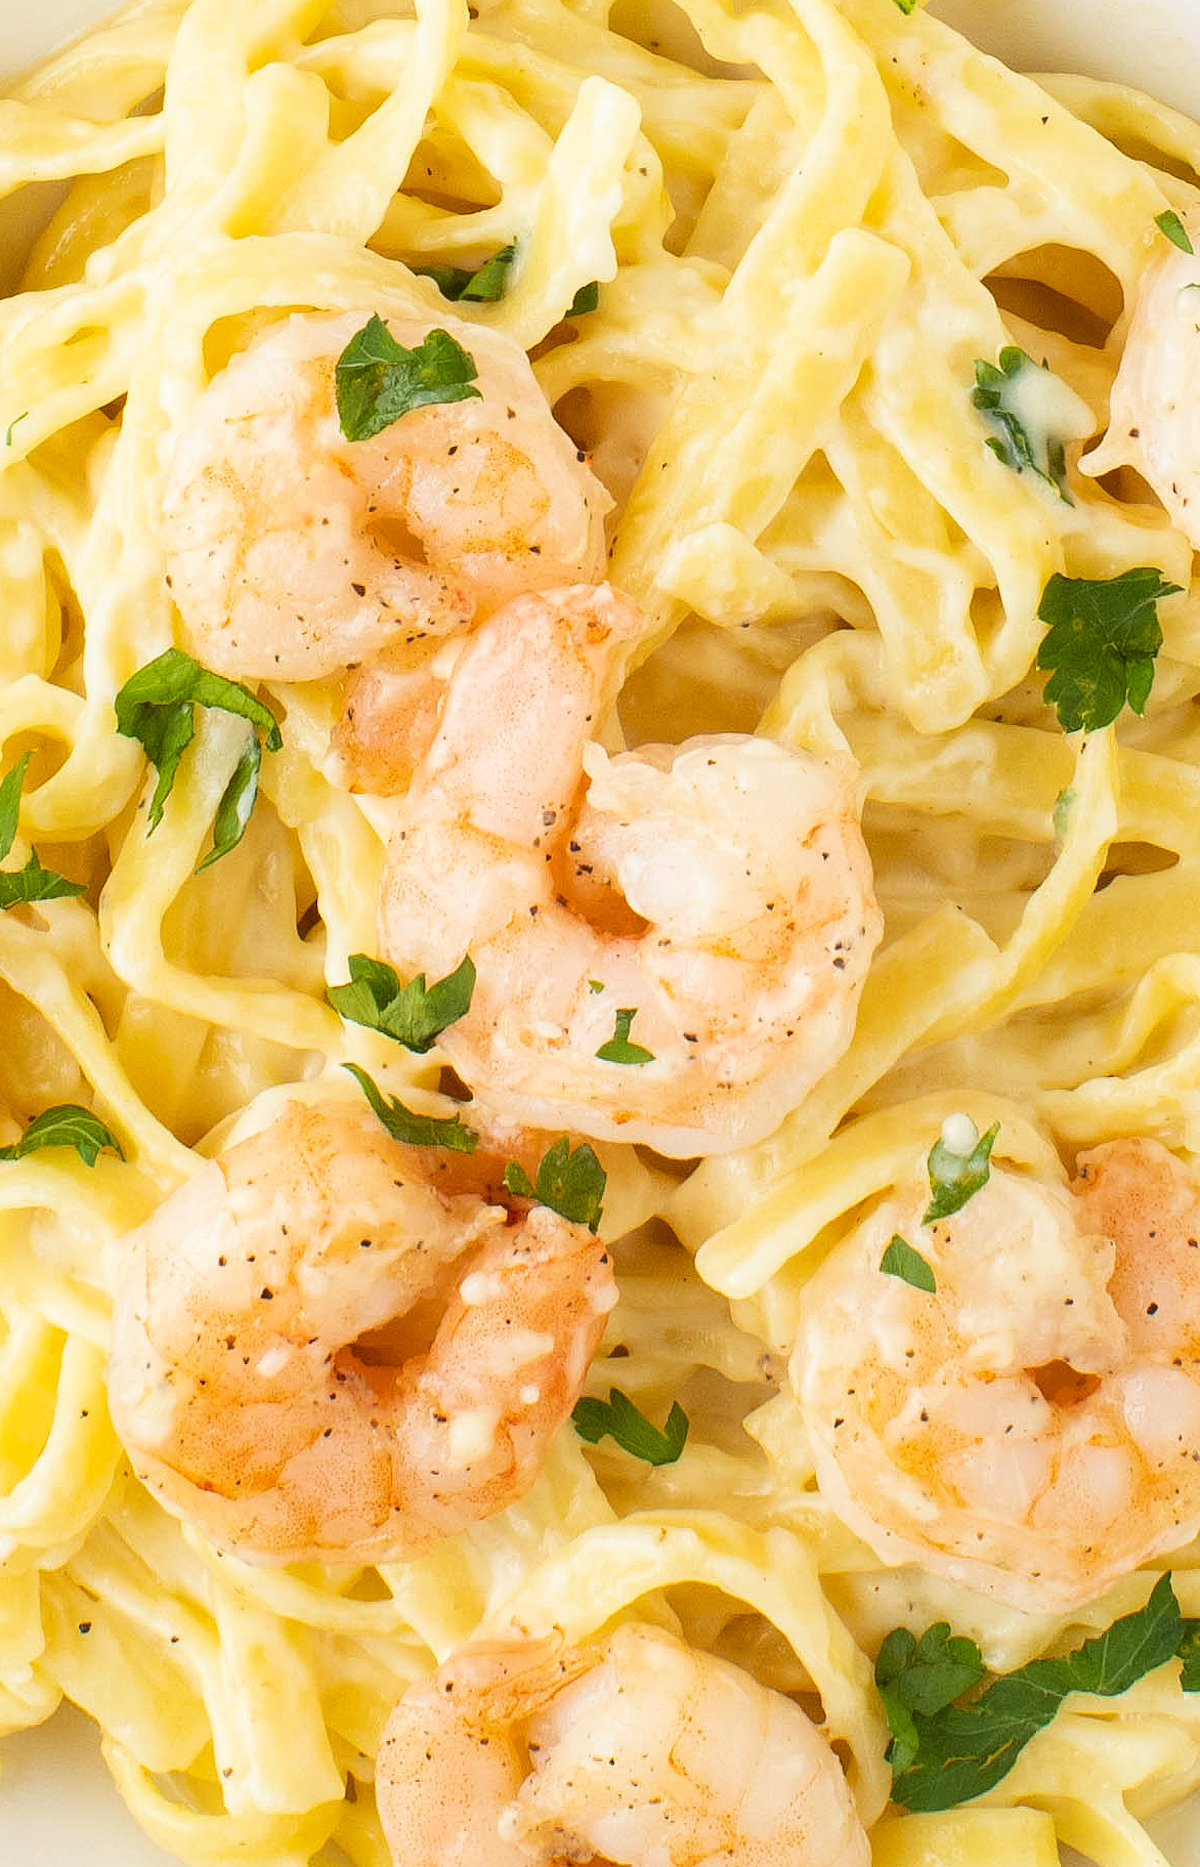 Shrimp in creamy alfredo sauce with pasta.